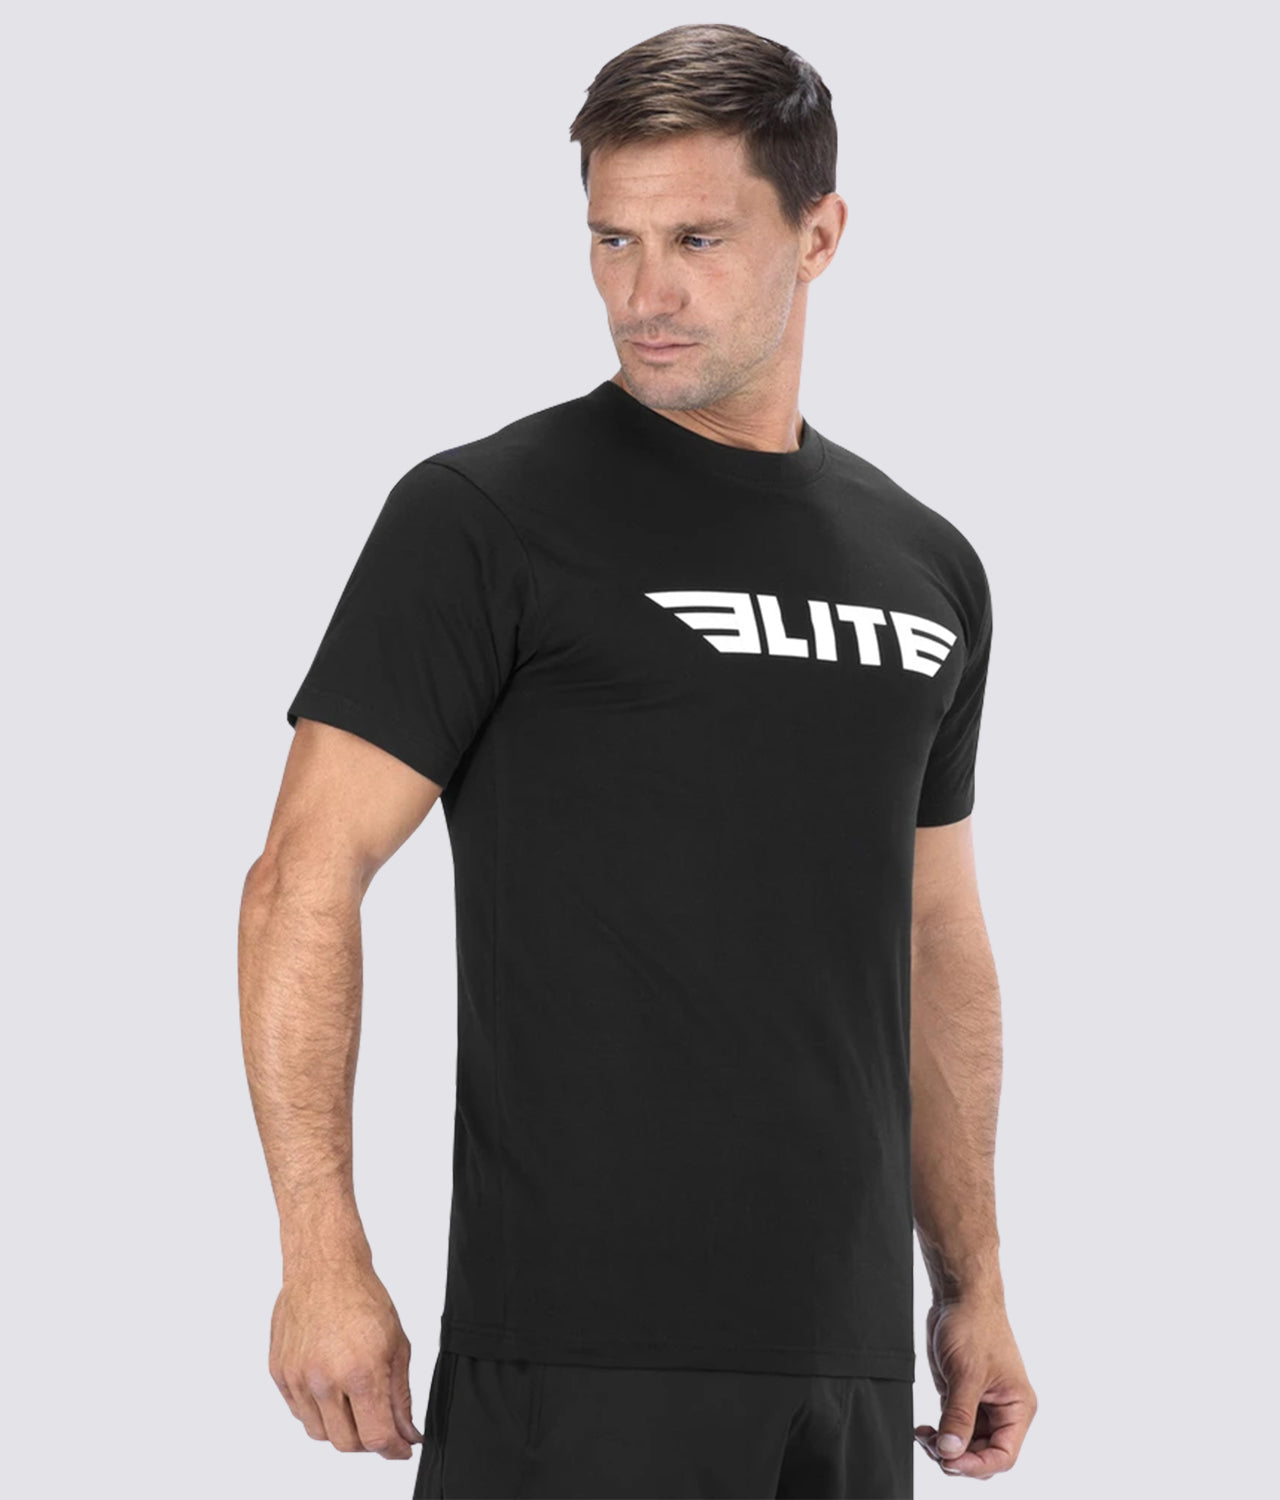 Elite Sports Athletic Fit Black Wrestling T-Shirts